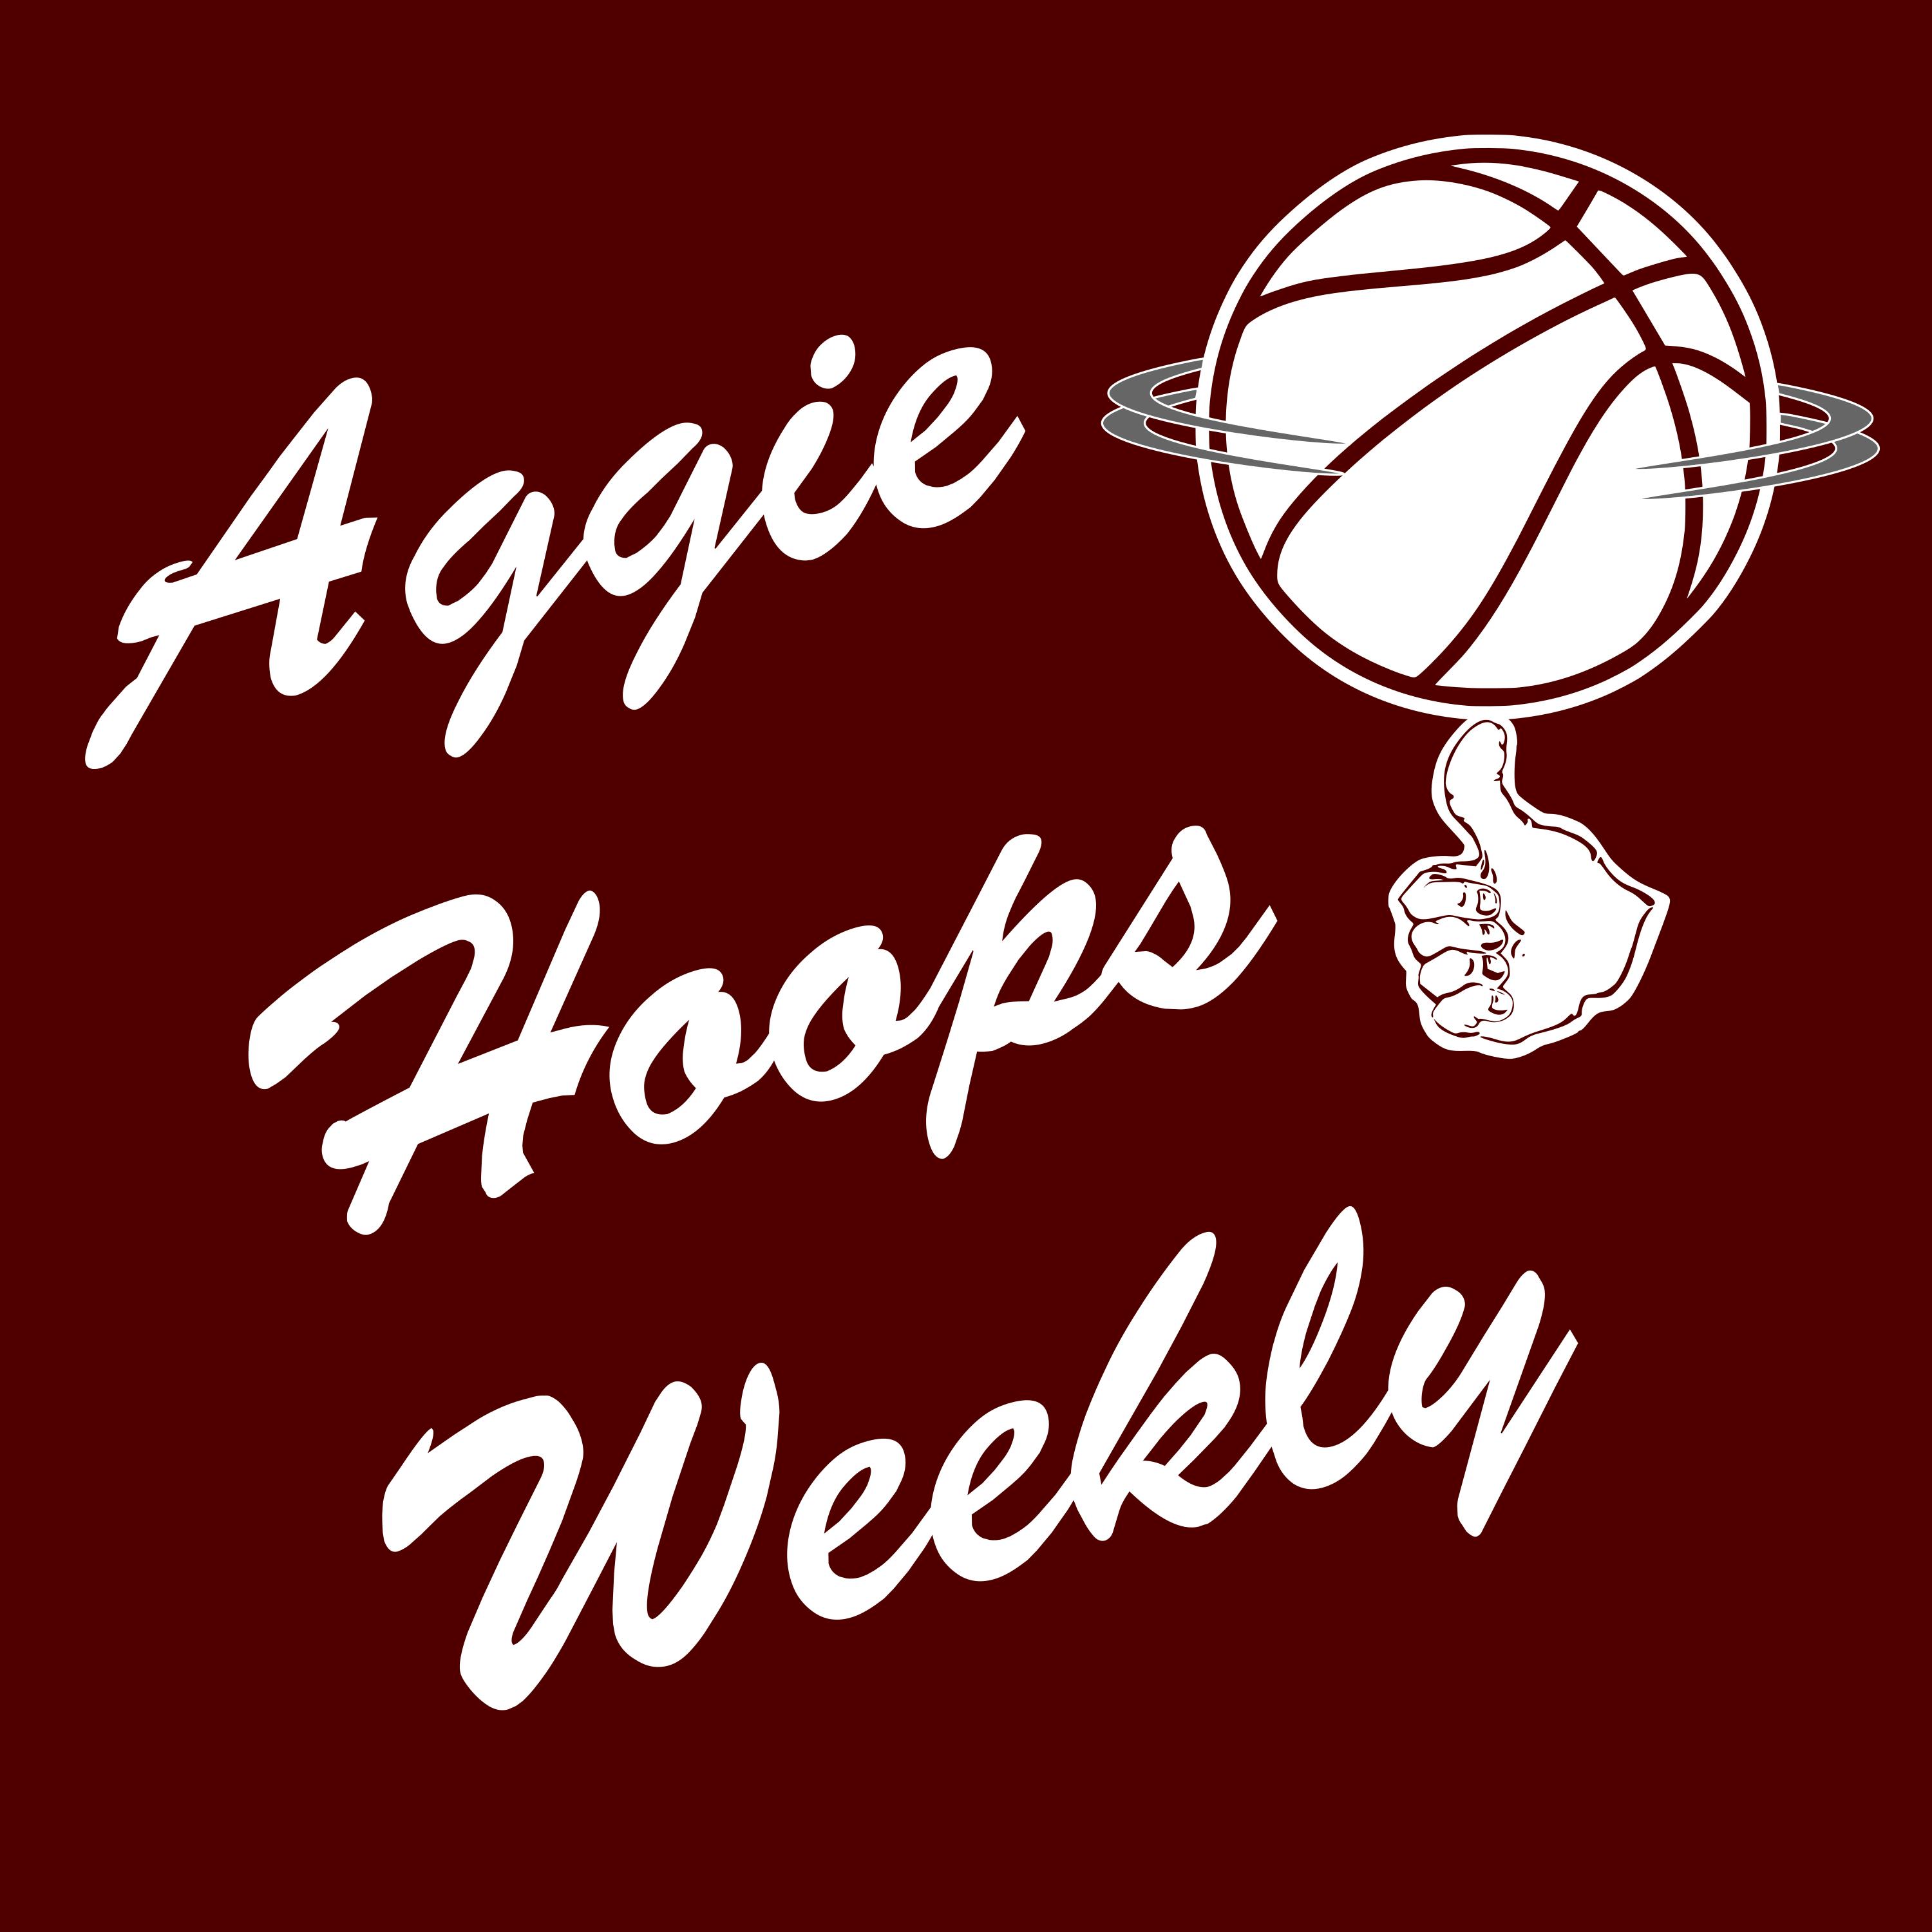 Aggie Hoops Weekly: Finding Their Stride